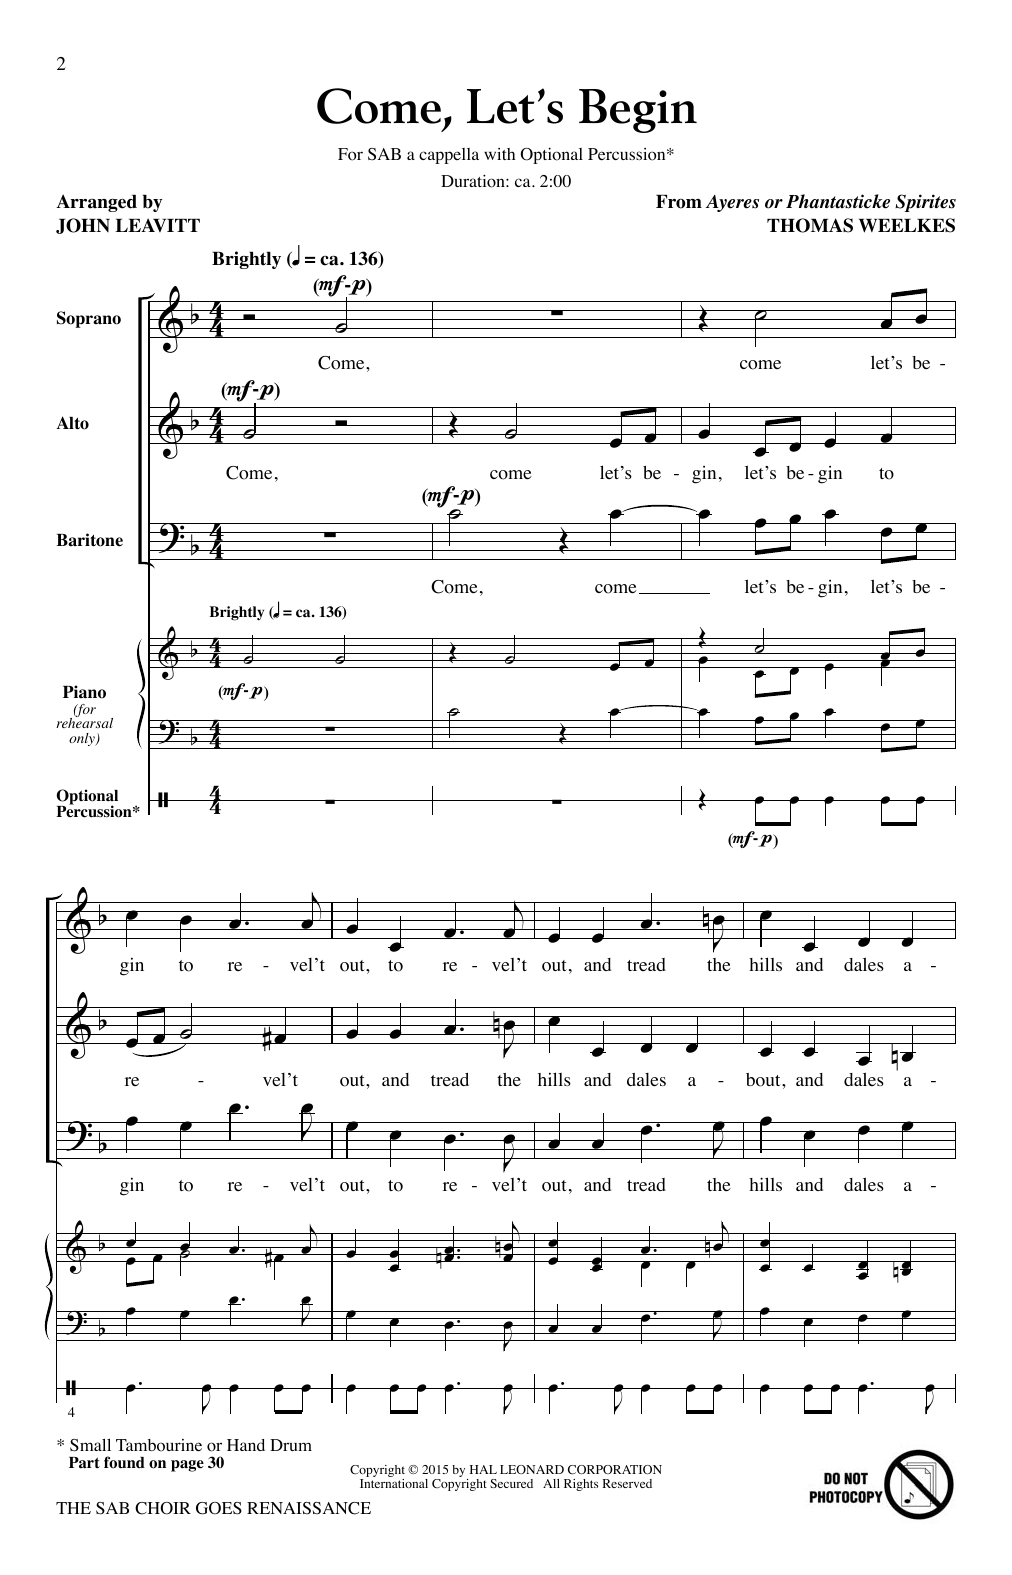 John Leavitt The SAB Choir Goes Renaissance Sheet Music Notes & Chords for SAB - Download or Print PDF